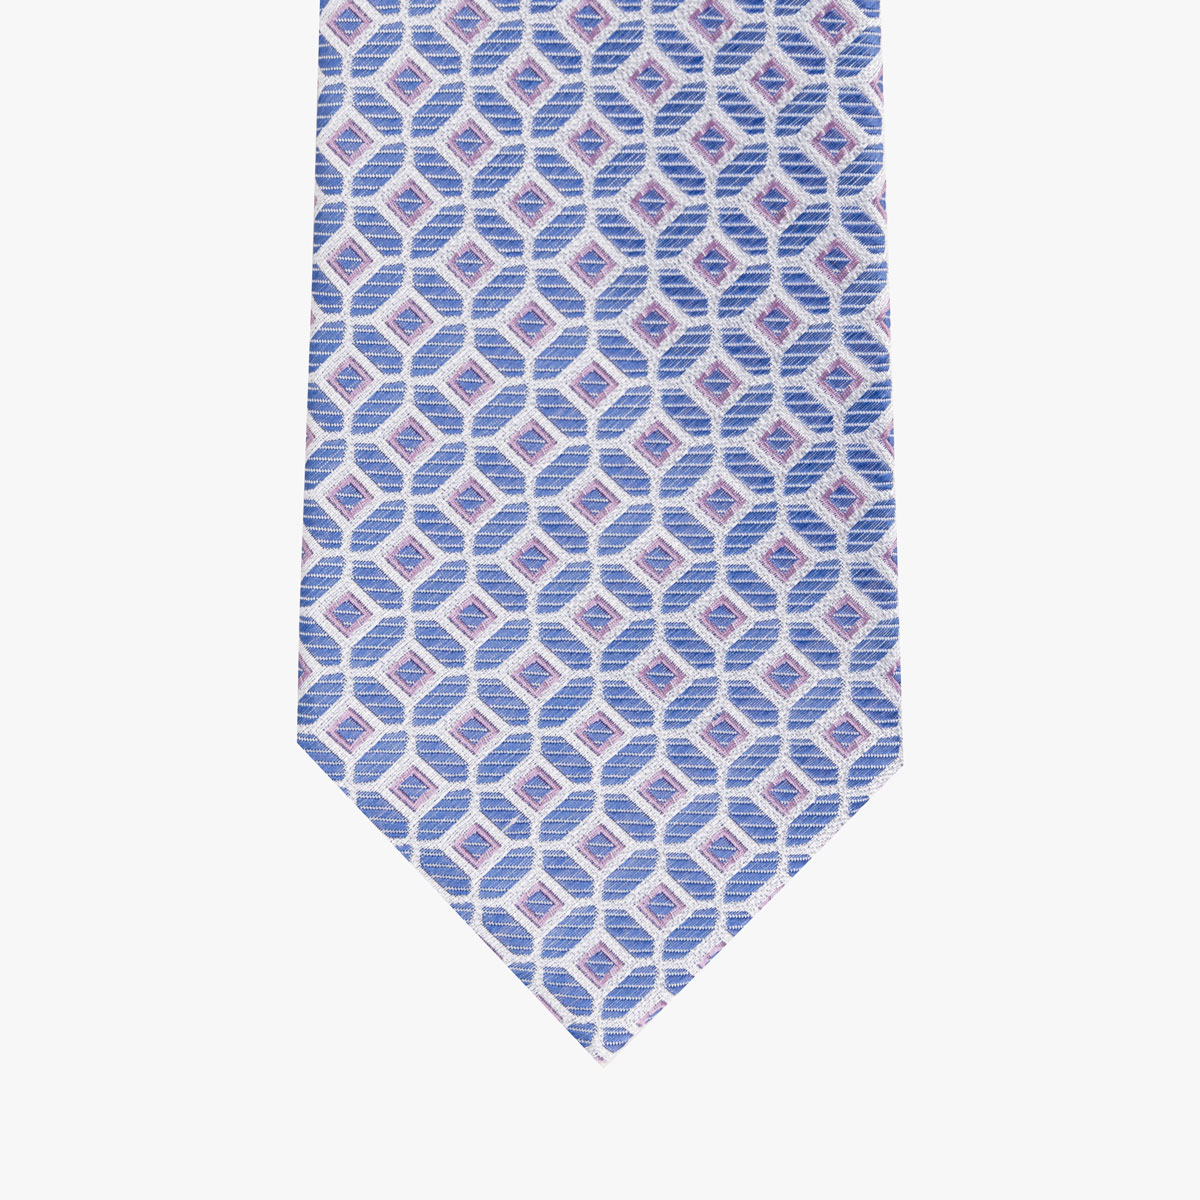 Krawatte mit geometrischem Muster in blau lila